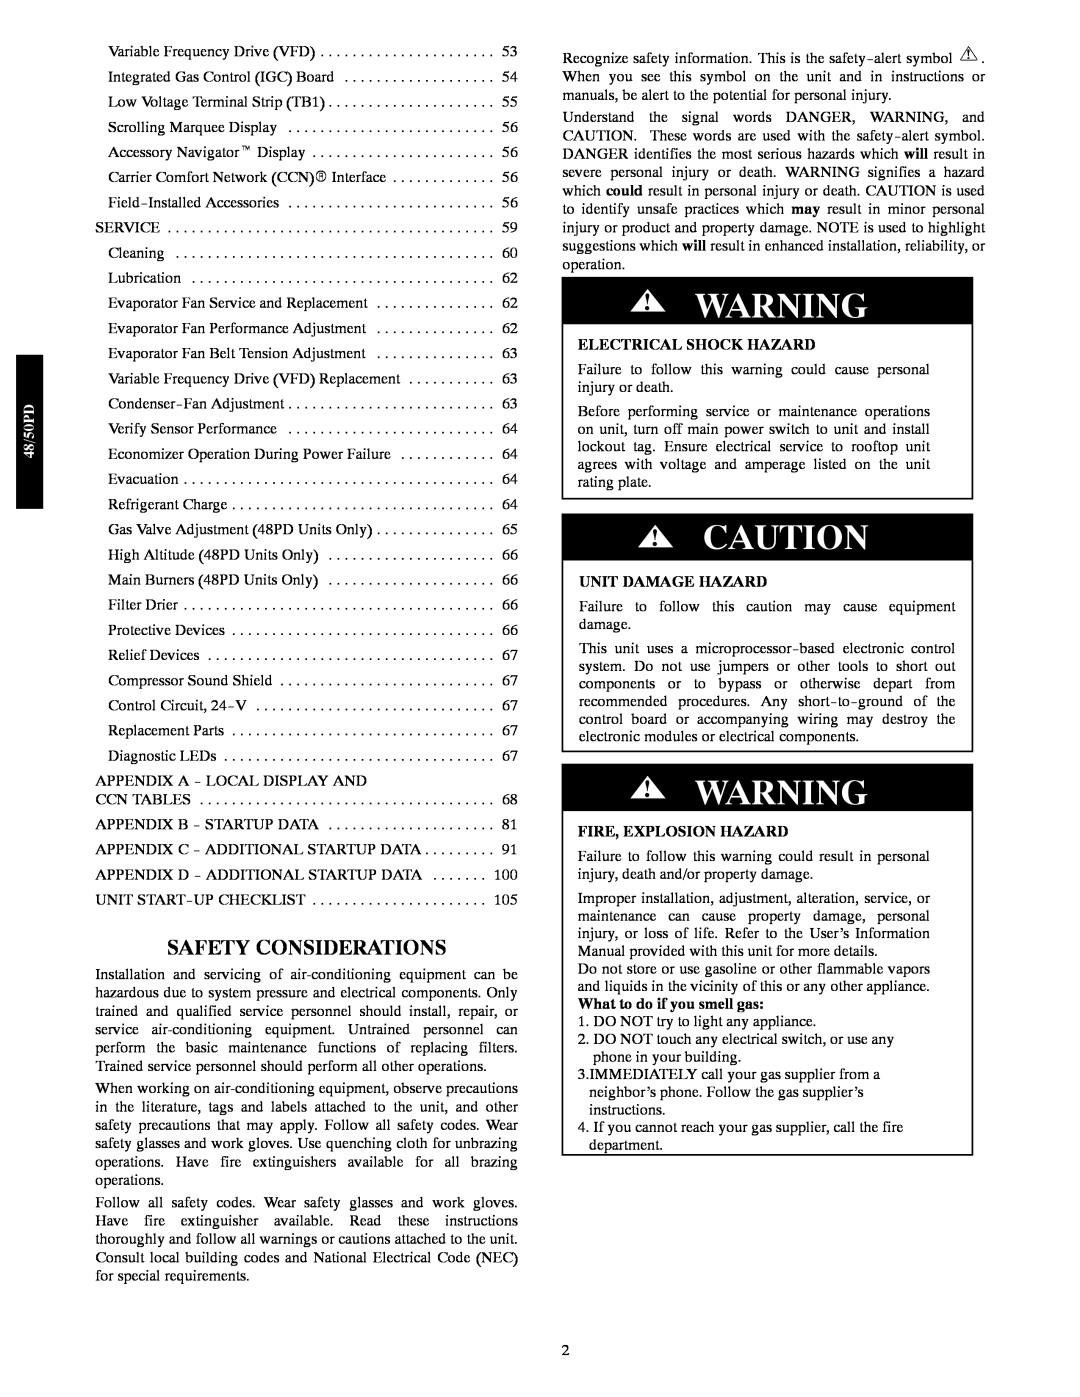 Carrier 48/50PD05 manual Safety Considerations, Electrical Shock Hazard, Unit Damage Hazard, Fire, Explosion Hazard 